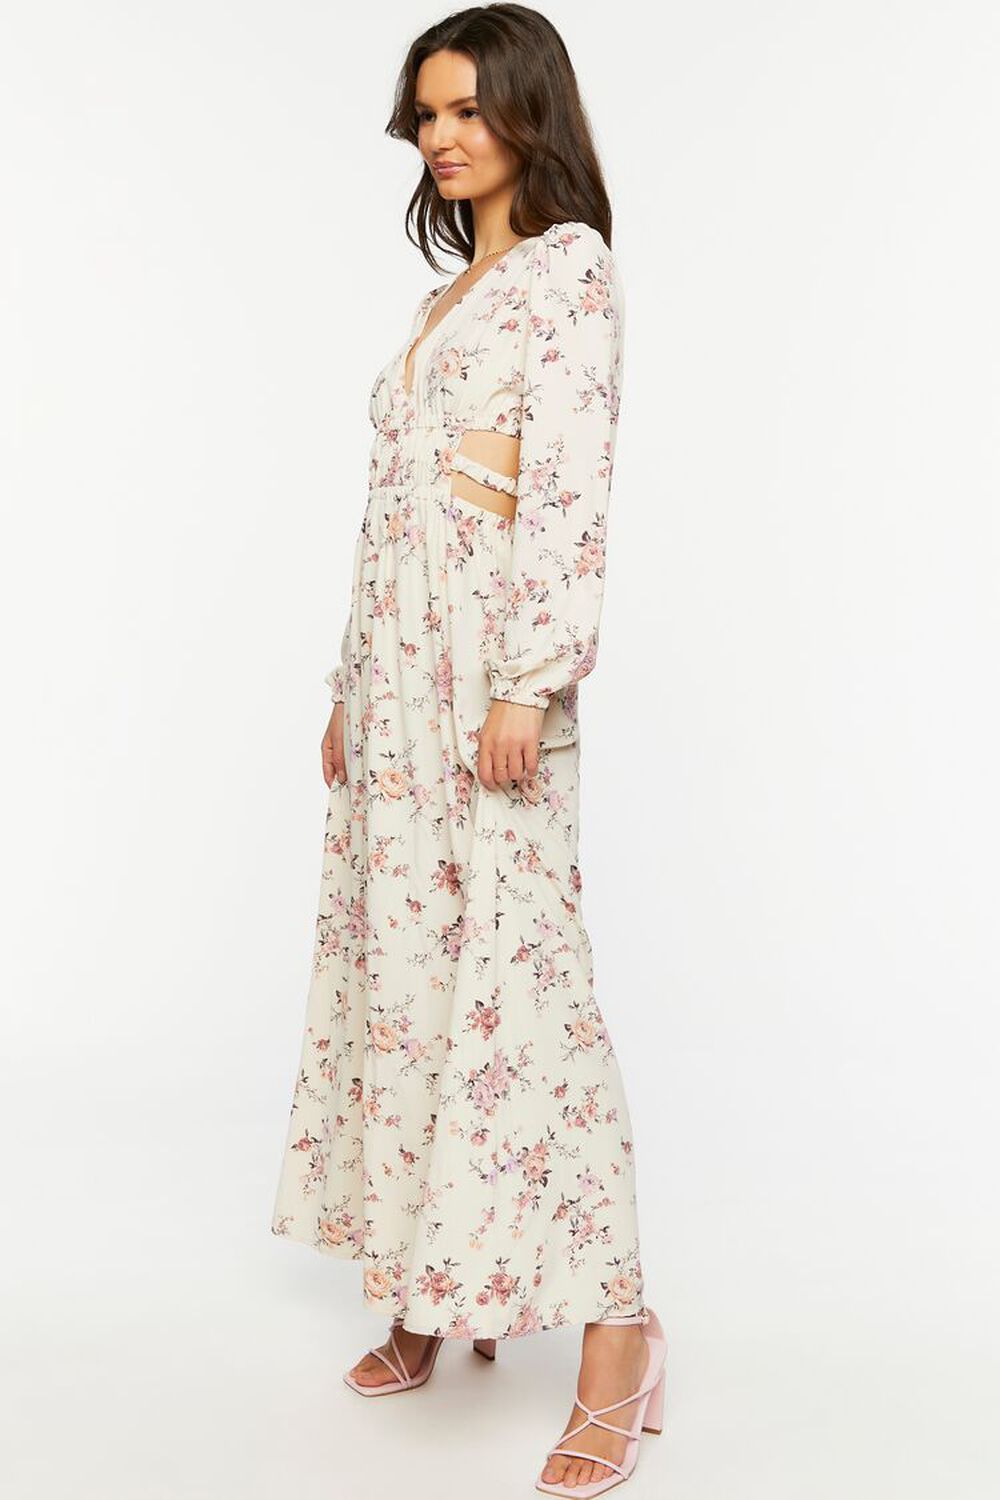 IVORY/MULTI Cutout Floral Print Maxi Dress, image 2